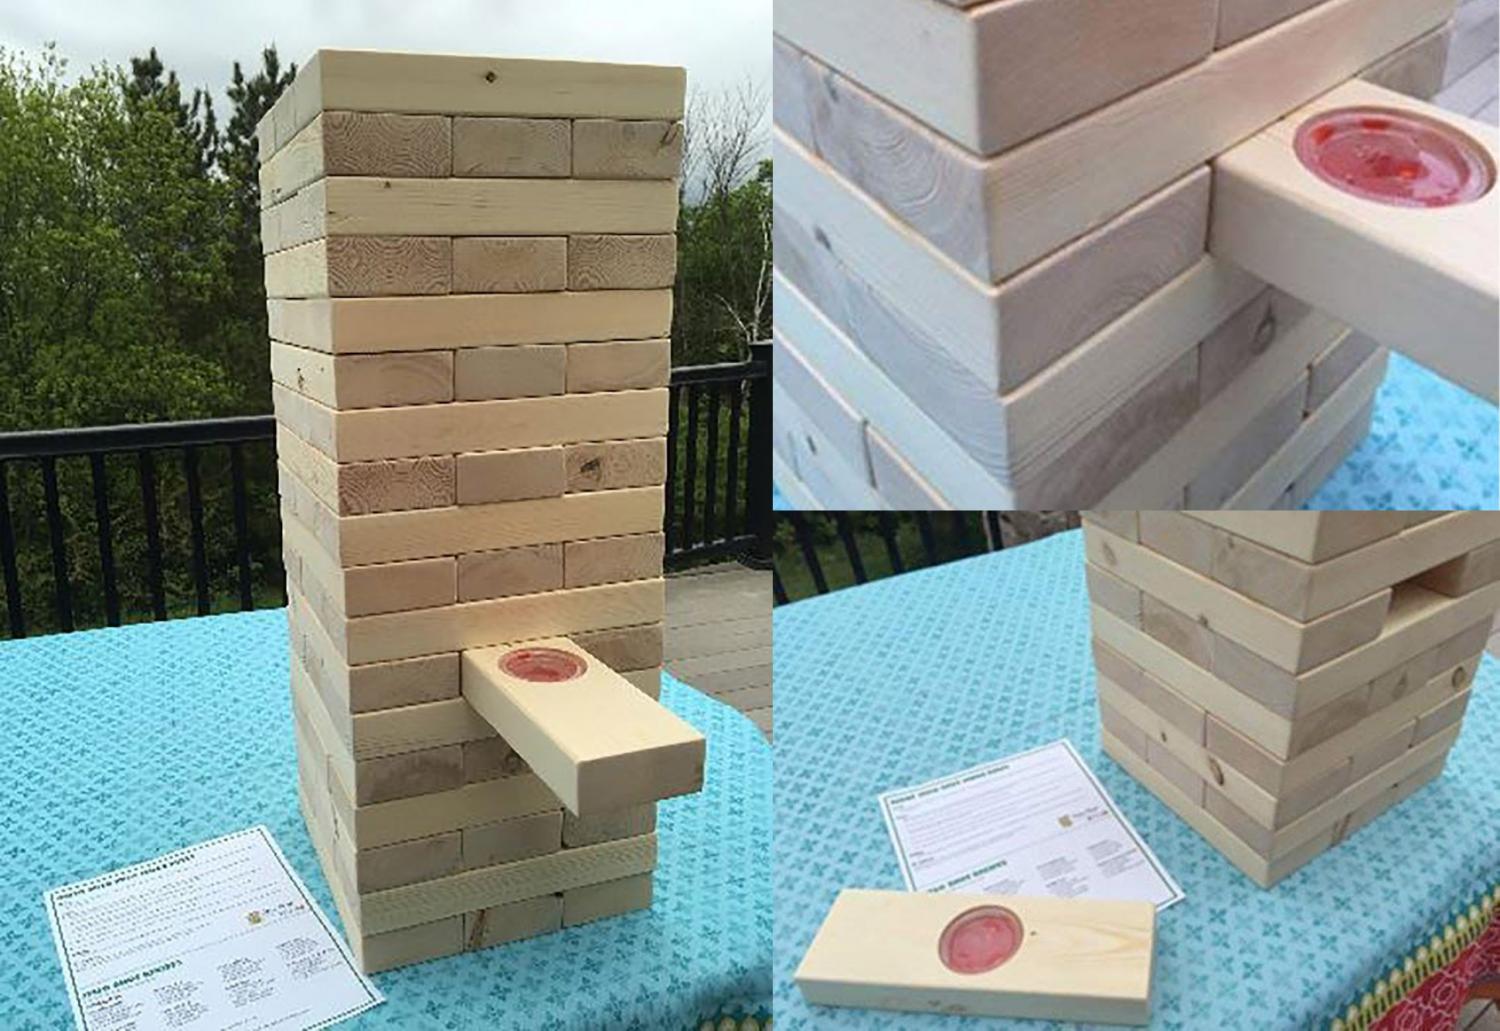 Giant Jenga Jello Shot Game - Tipsy tower with hidden jello shots inside blocks